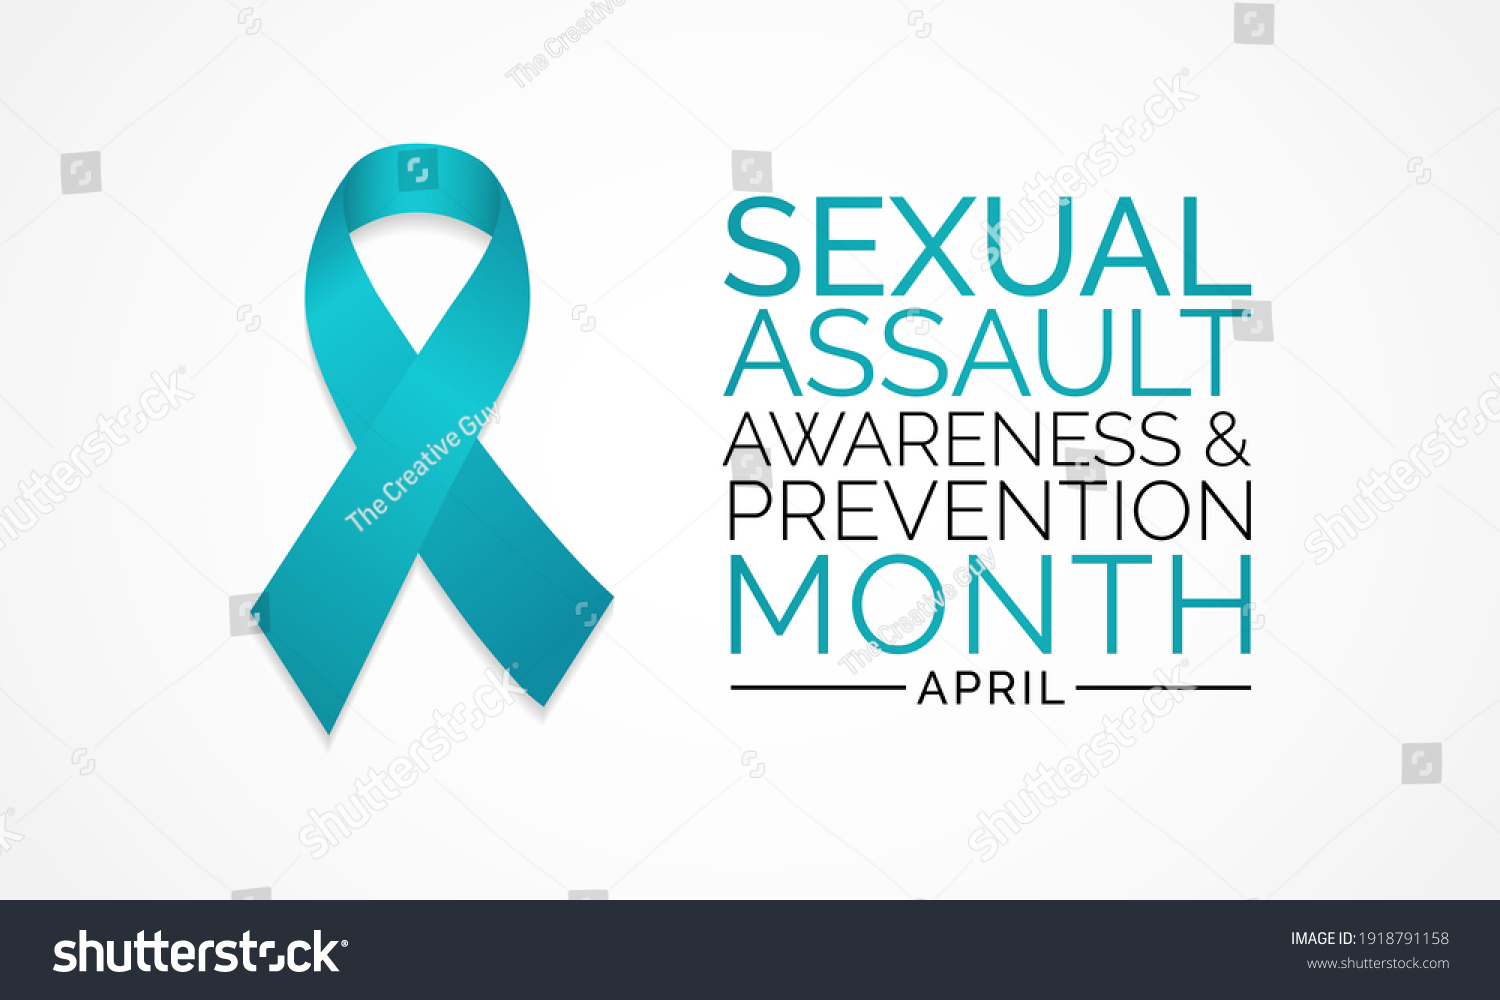 Vektor Stok Sexual Assault Awareness Month Annual Campaign Tanpa Royalti 1918791158 Shutterstock